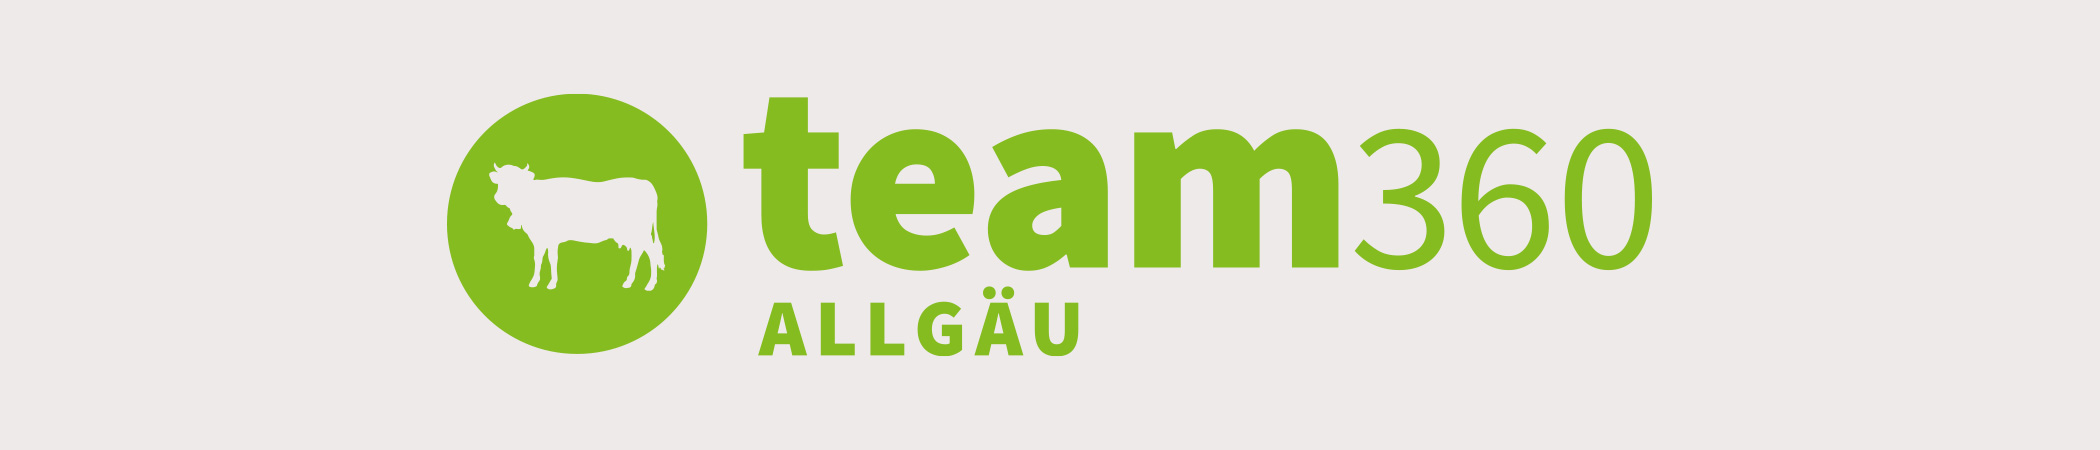 Team Allgäu | 360 Grad Rundgänge im Alläu